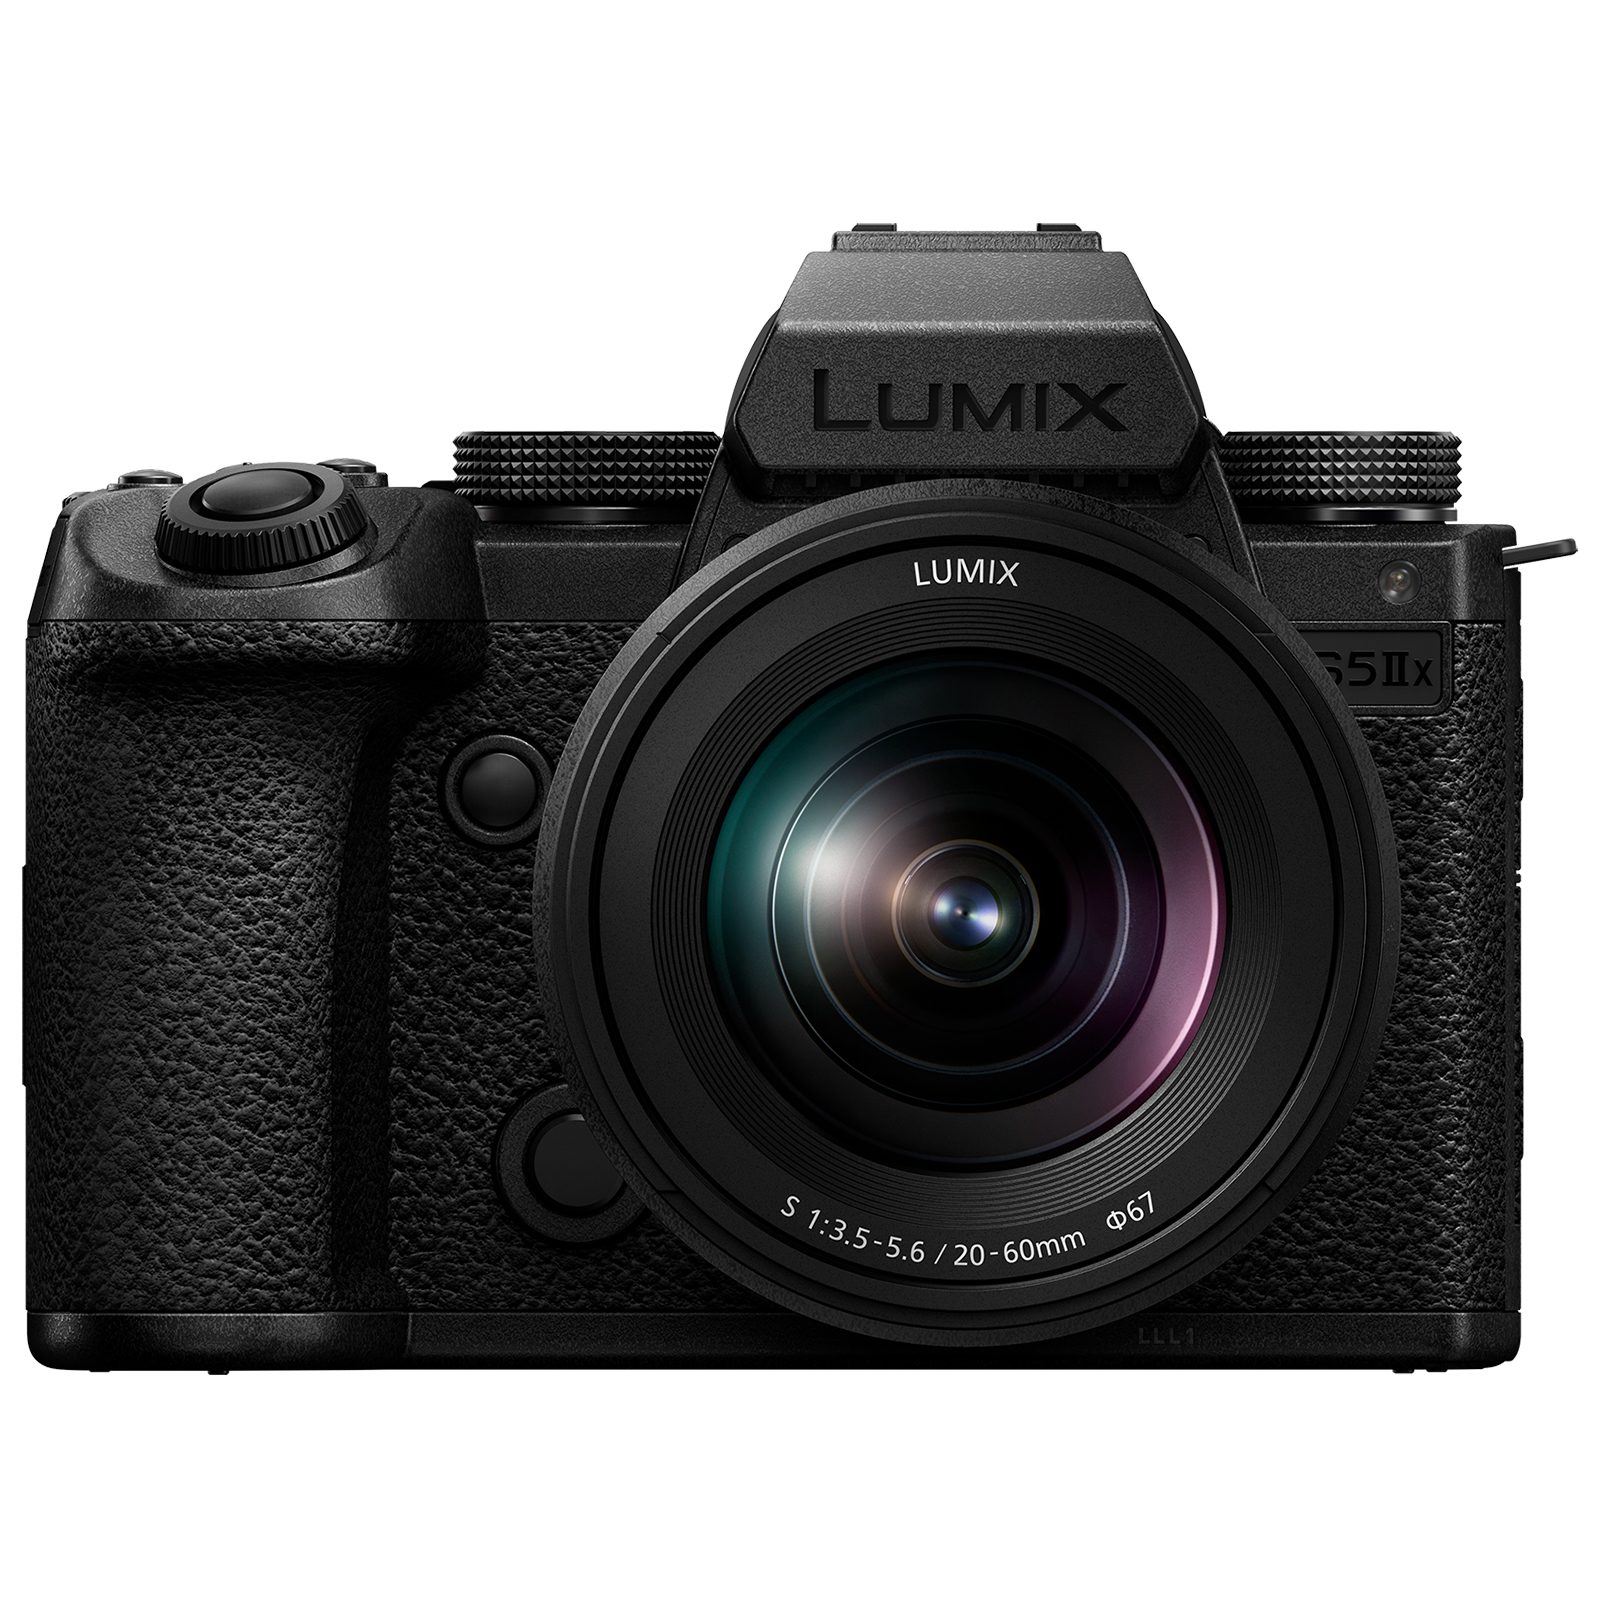 Image of Panasonic Lumix S5 IIX Digital Camera with 2060mm Lens